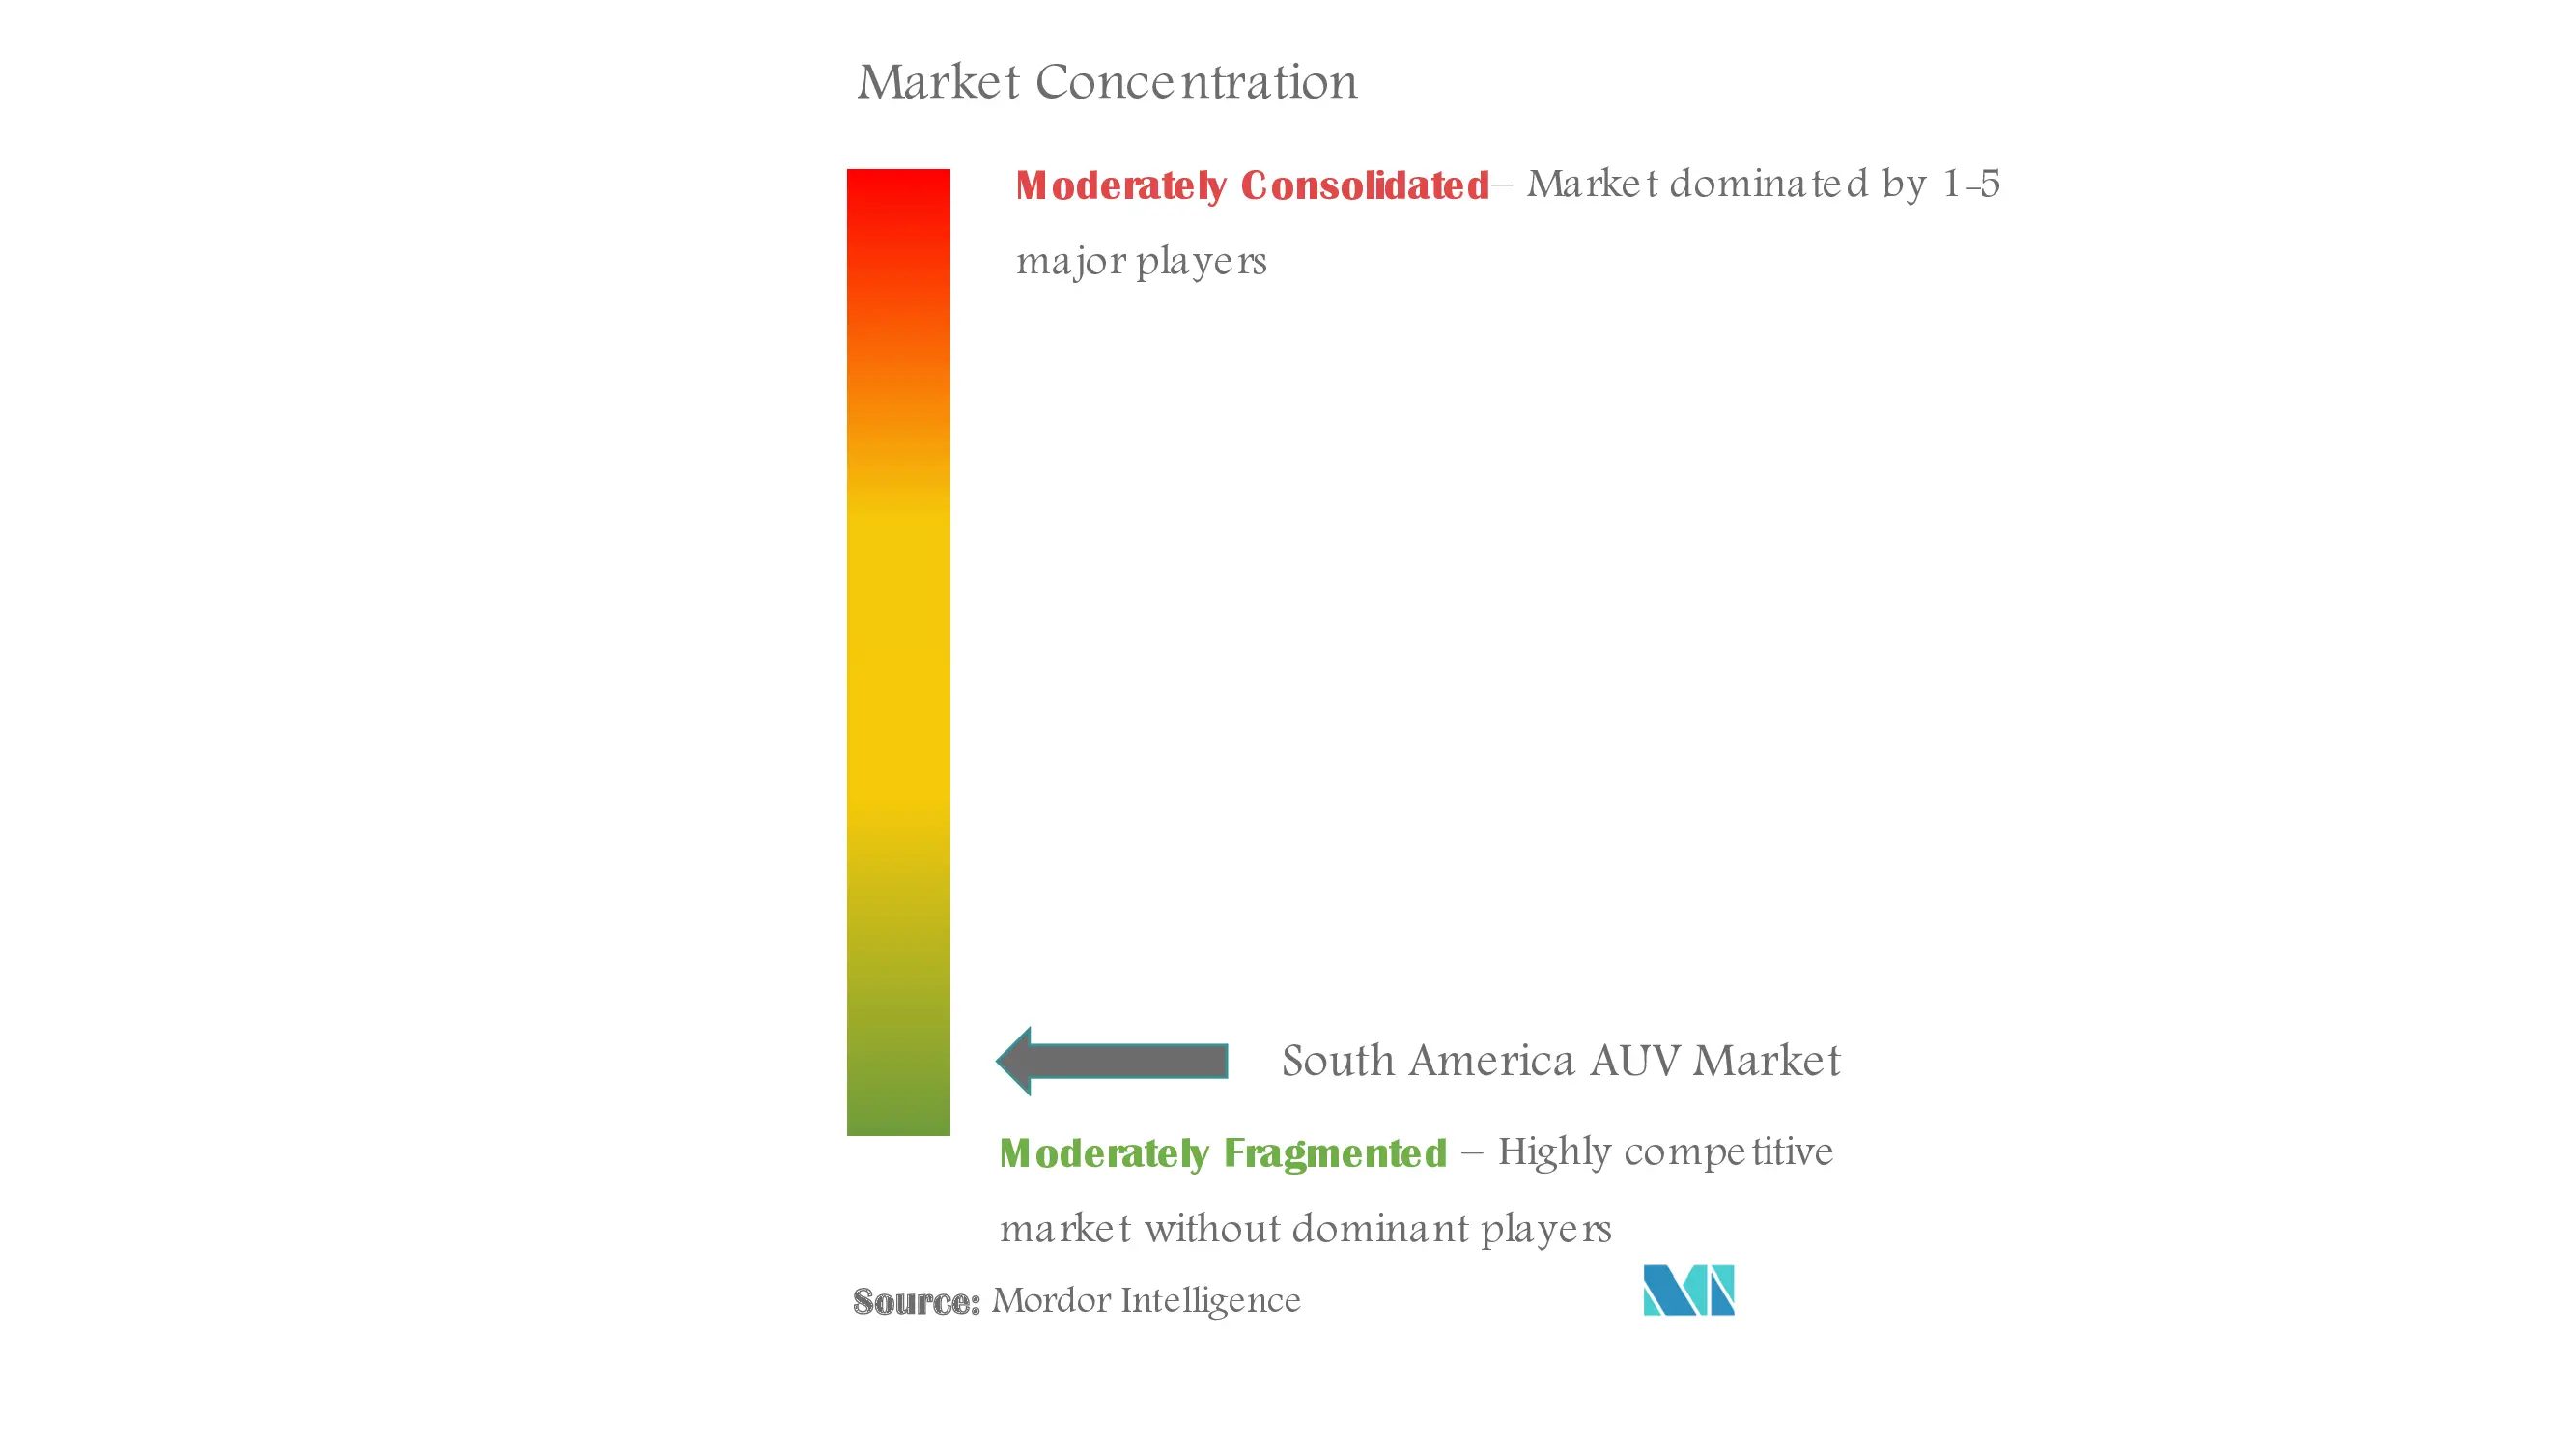 South America Auv Market Concentration